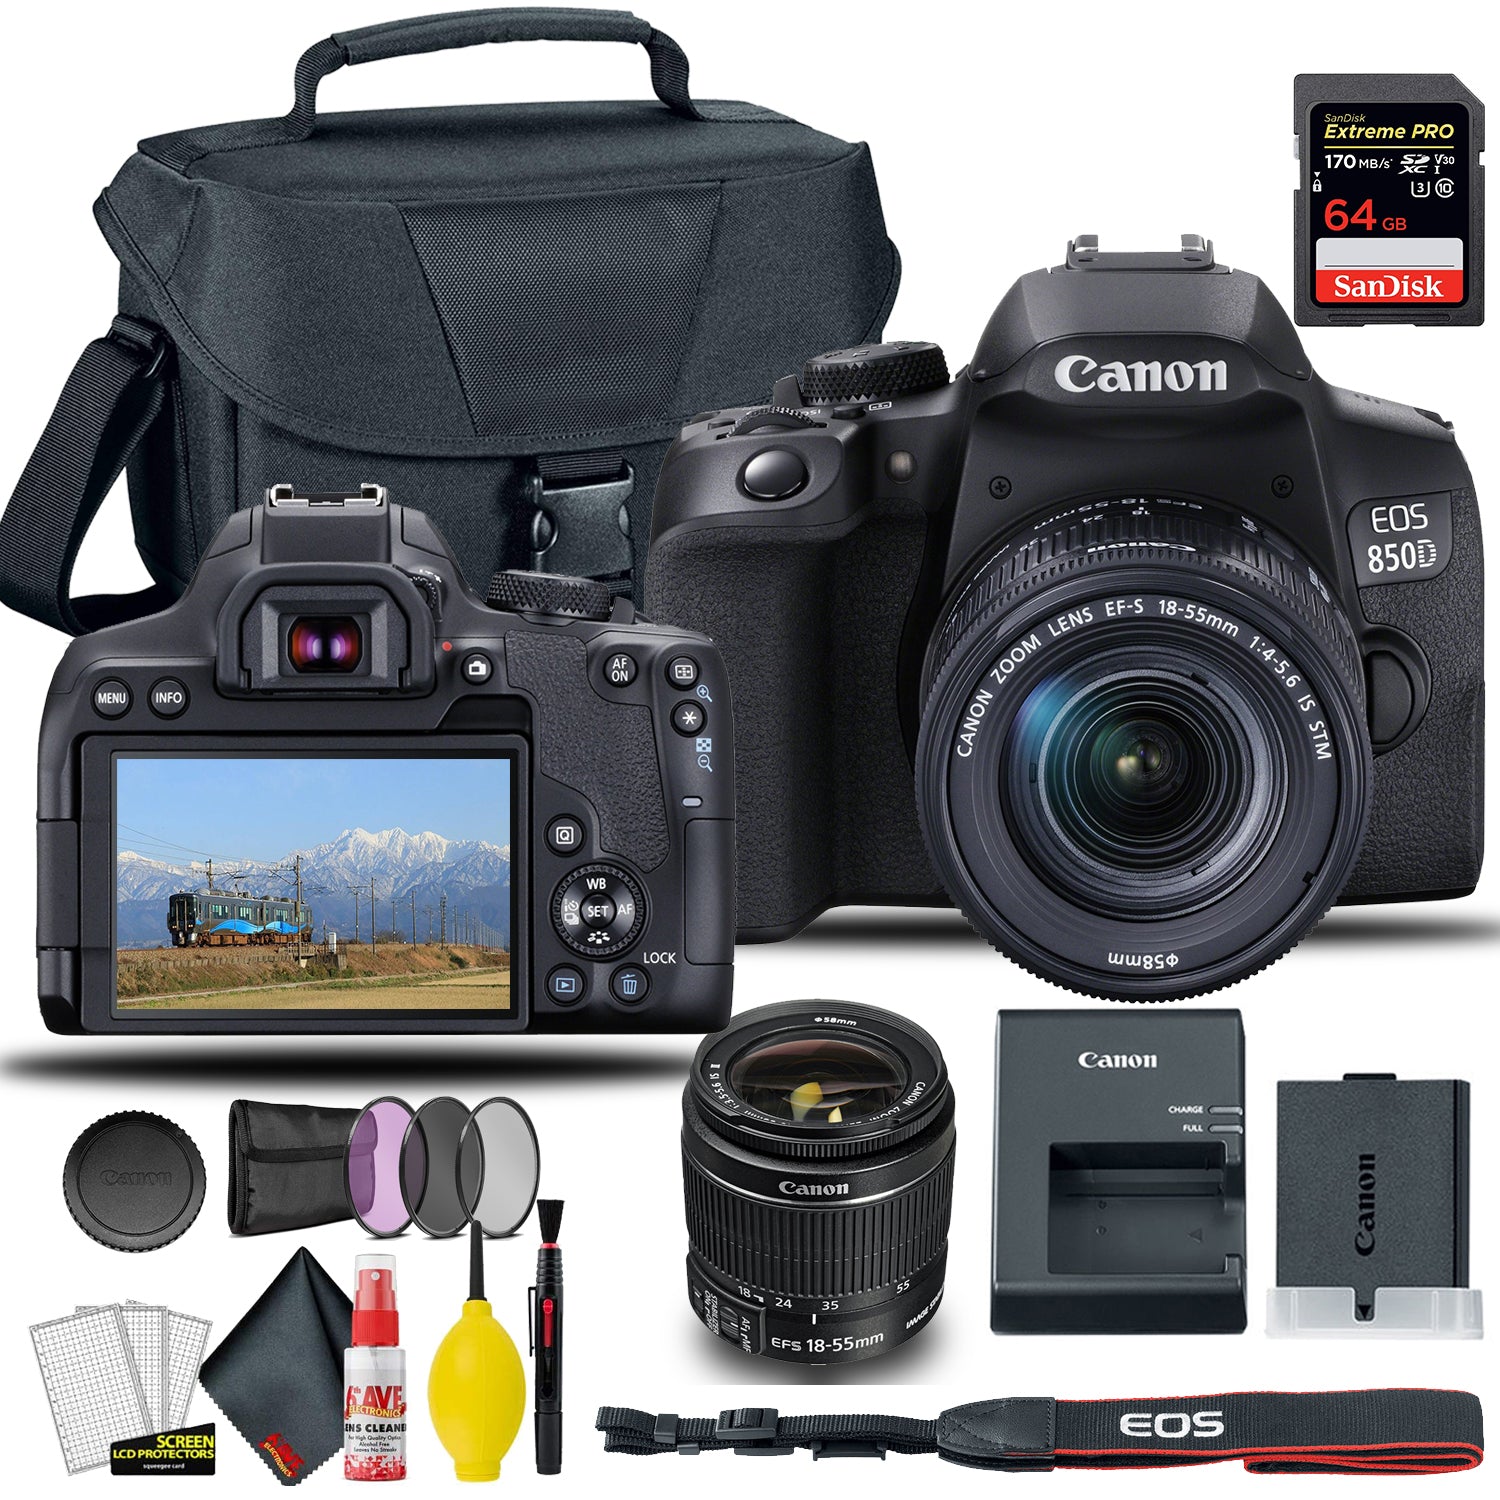 Canon EOS 850D / Rebel T8i DSLR Camera with 18-55mm Lens 58mm Filters International Bundle